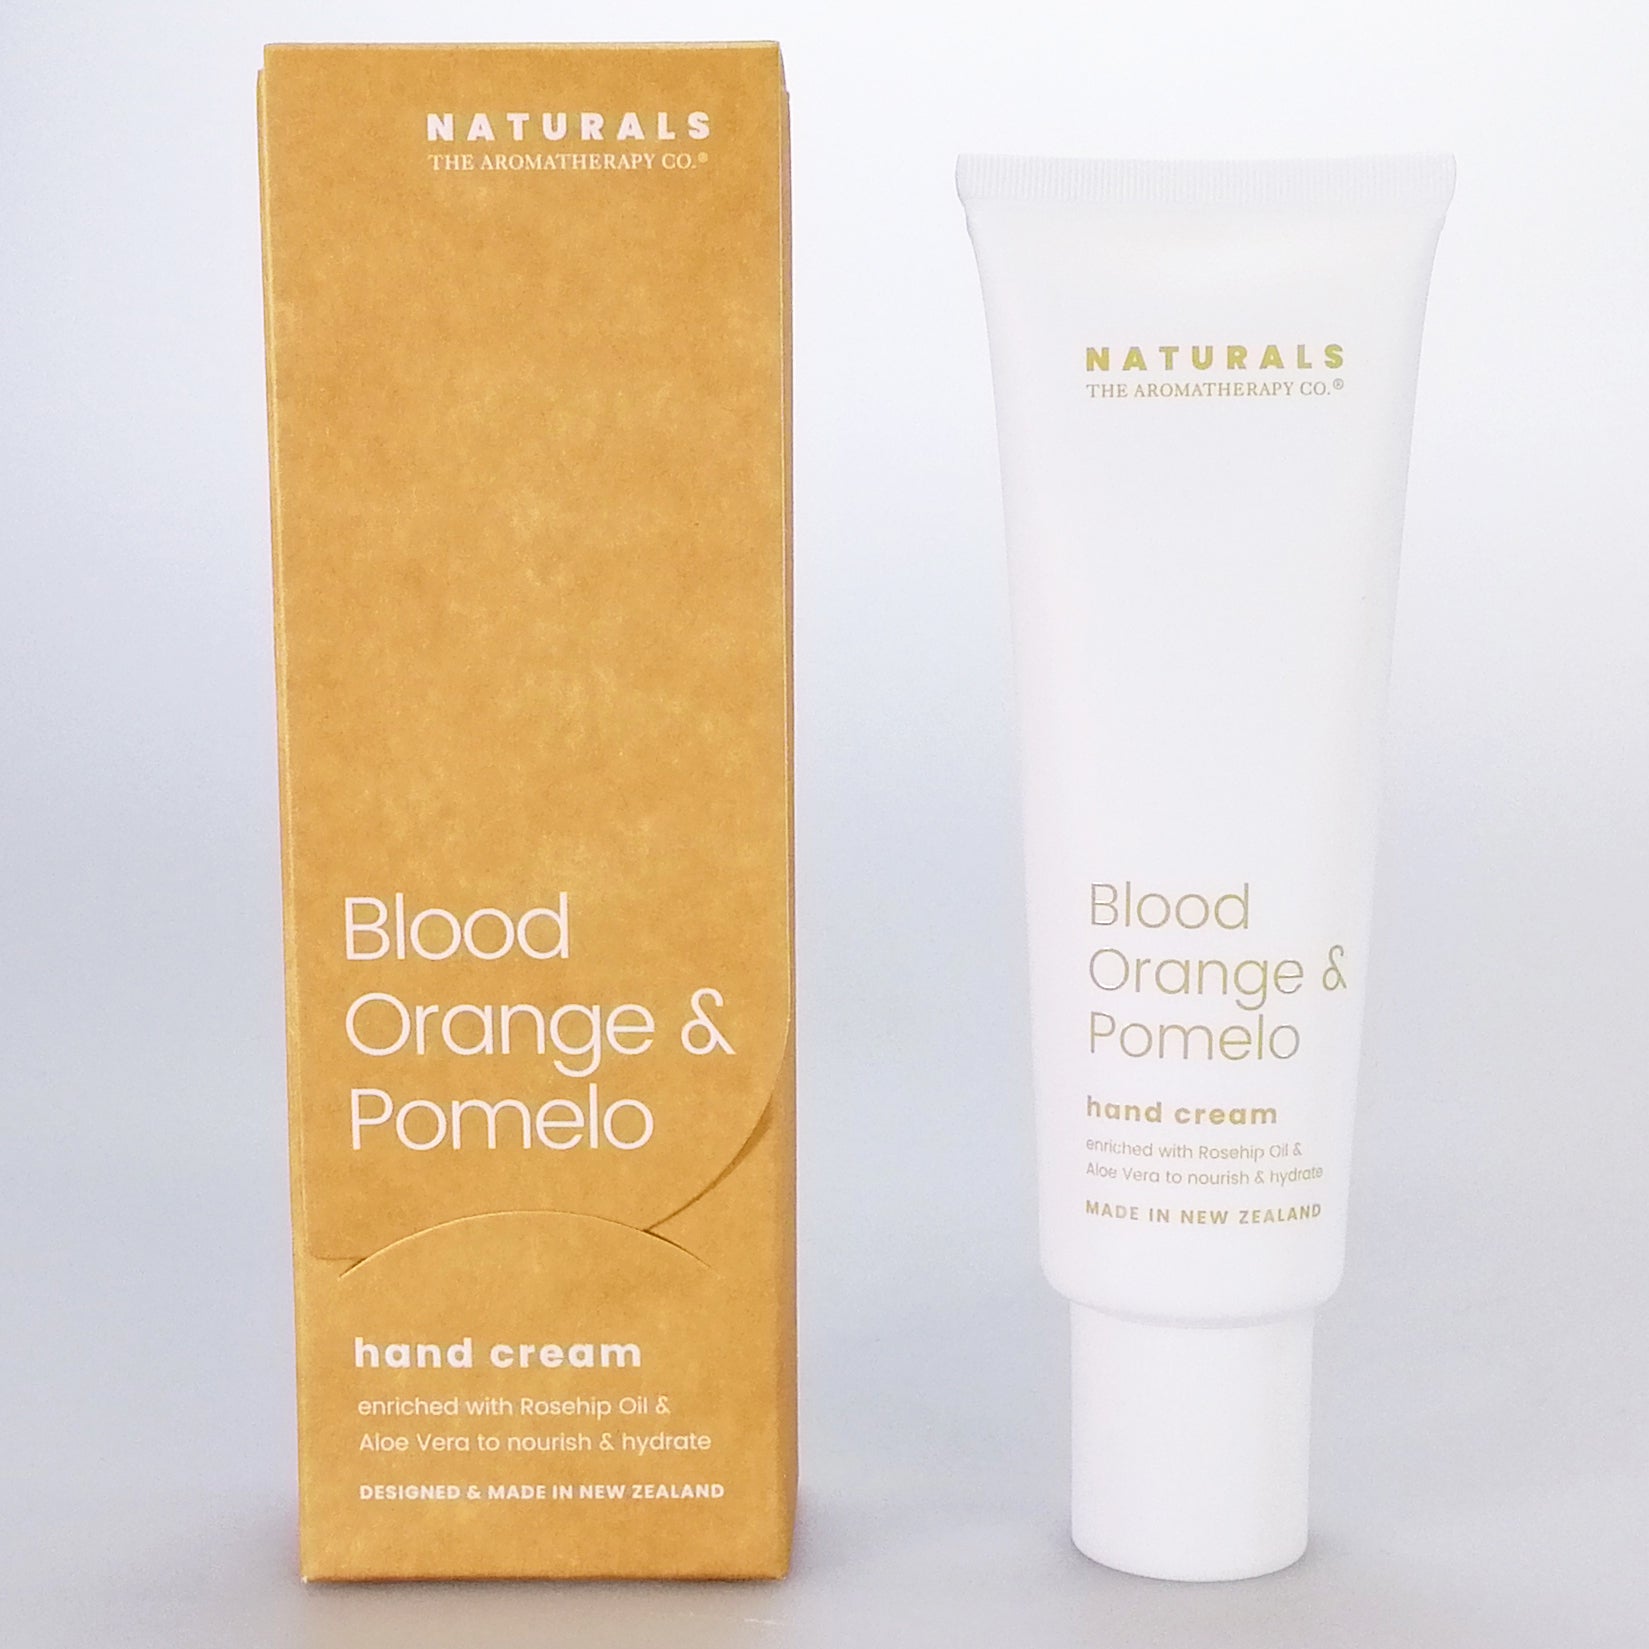 The Aromatherapy Co. Naturals - Blood Orange & Pomelo Hand Cream